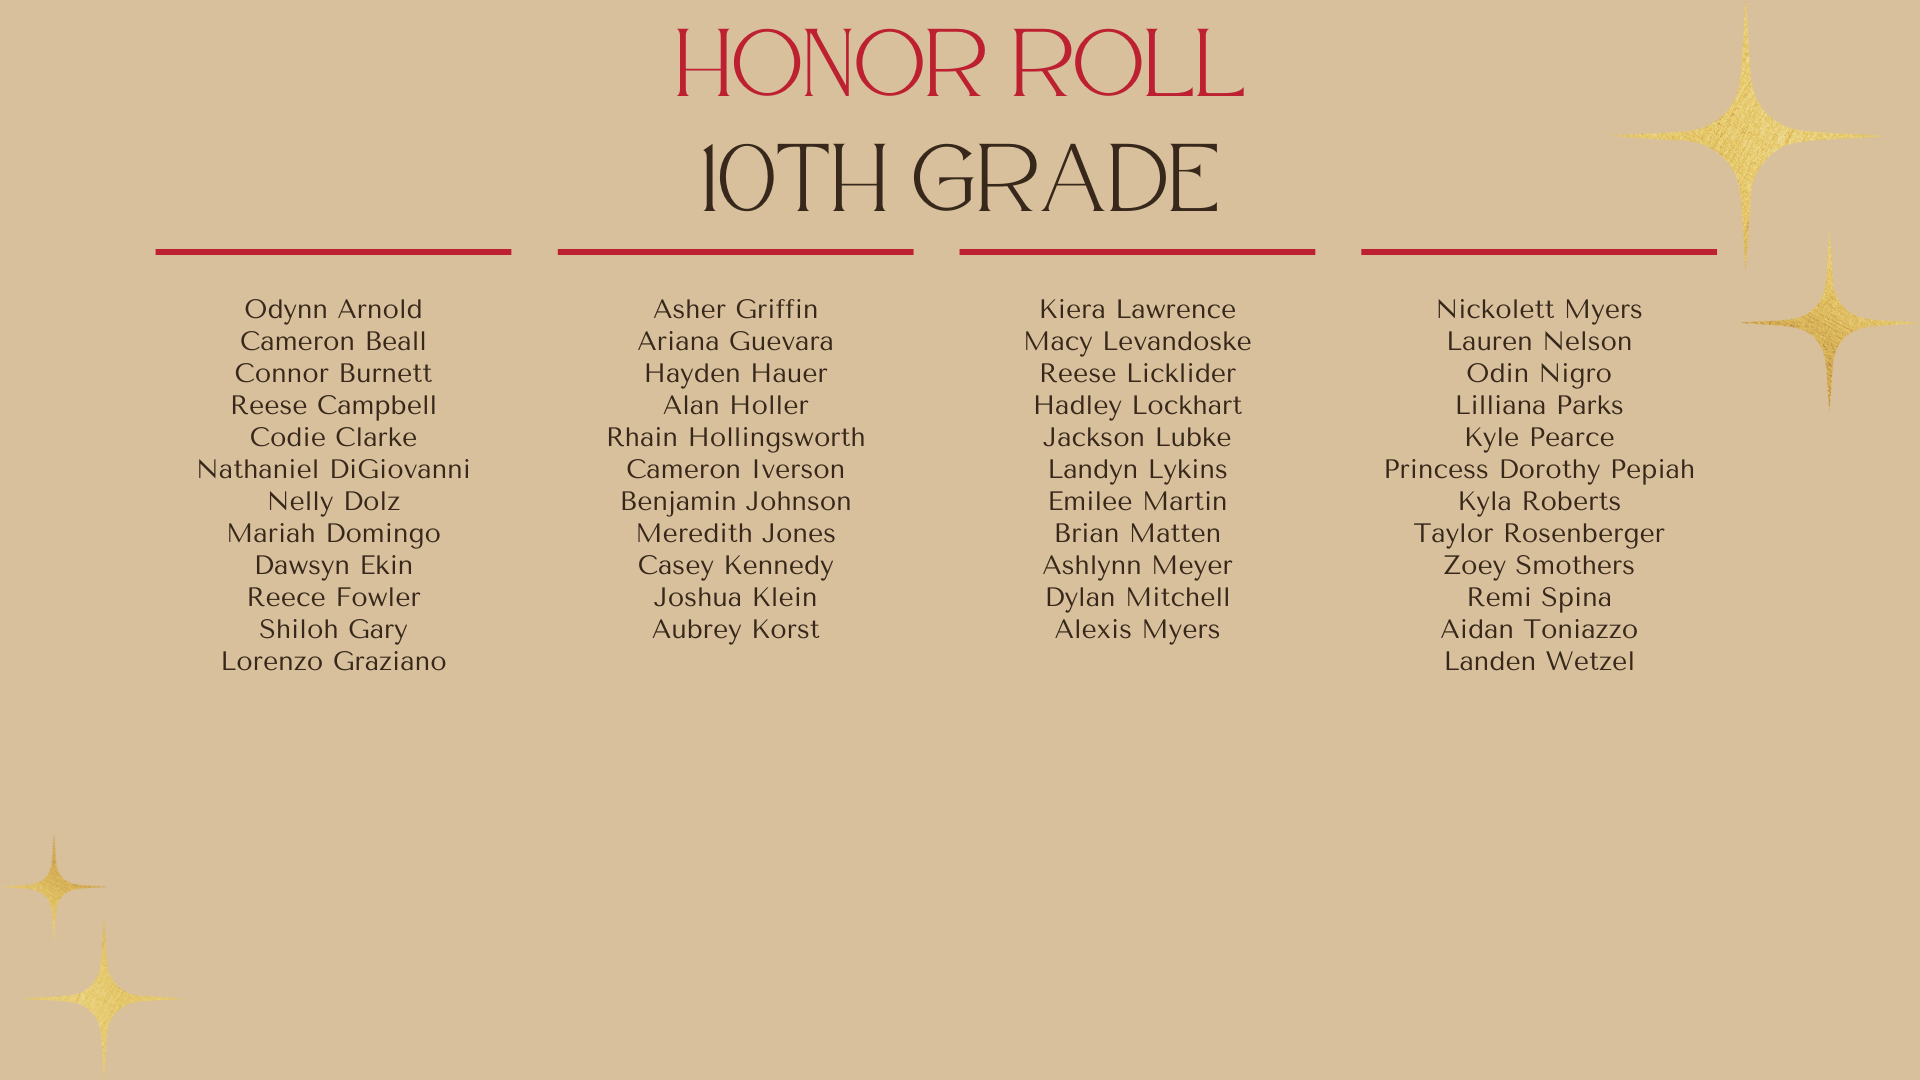 Honor Roll 10th grade